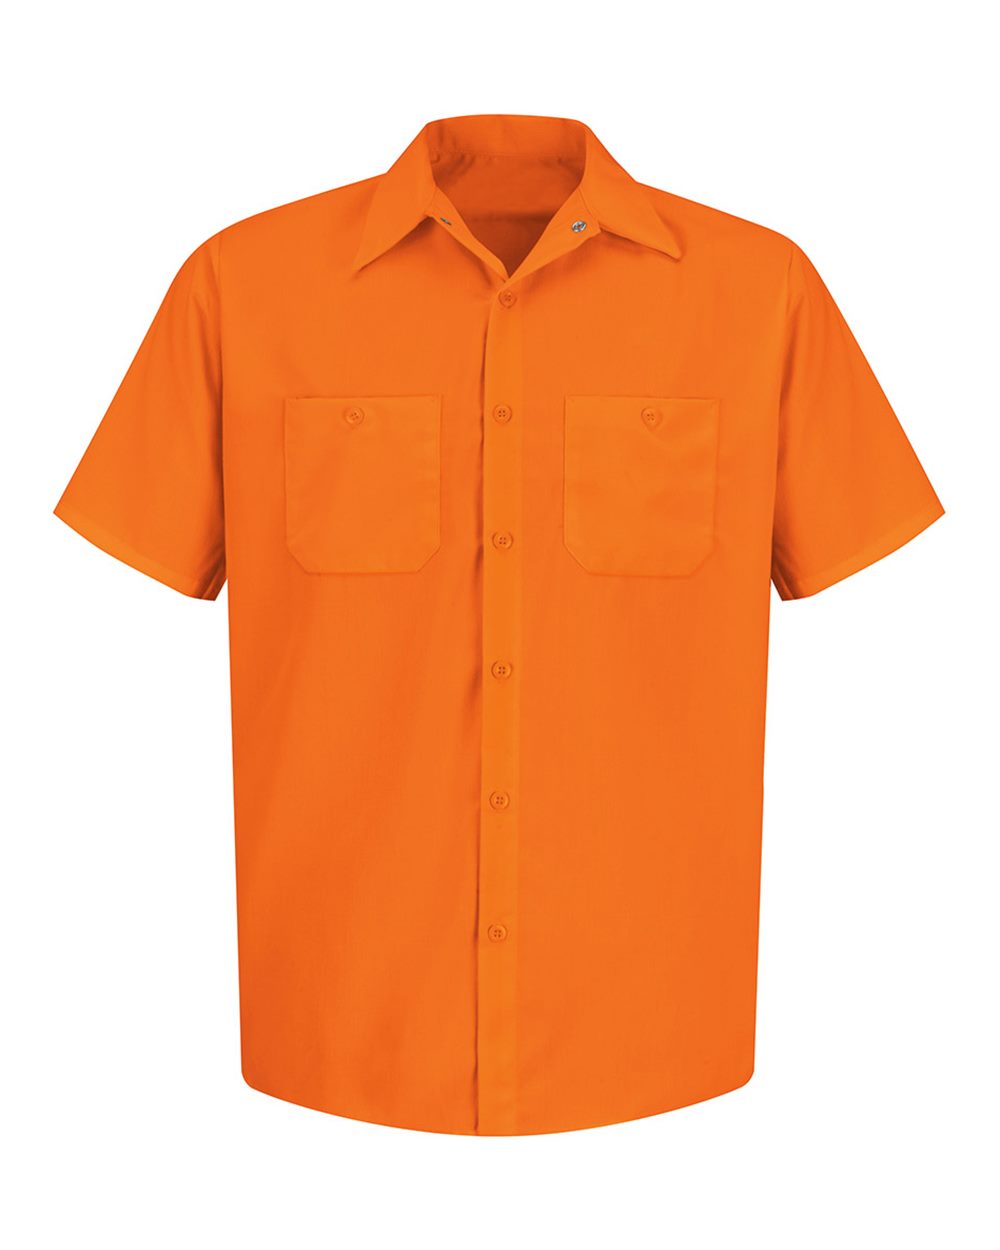 54530 Red Kap - Enhanced Visibility Short Sleeve Work Shirt Tall Sizes - SS24L